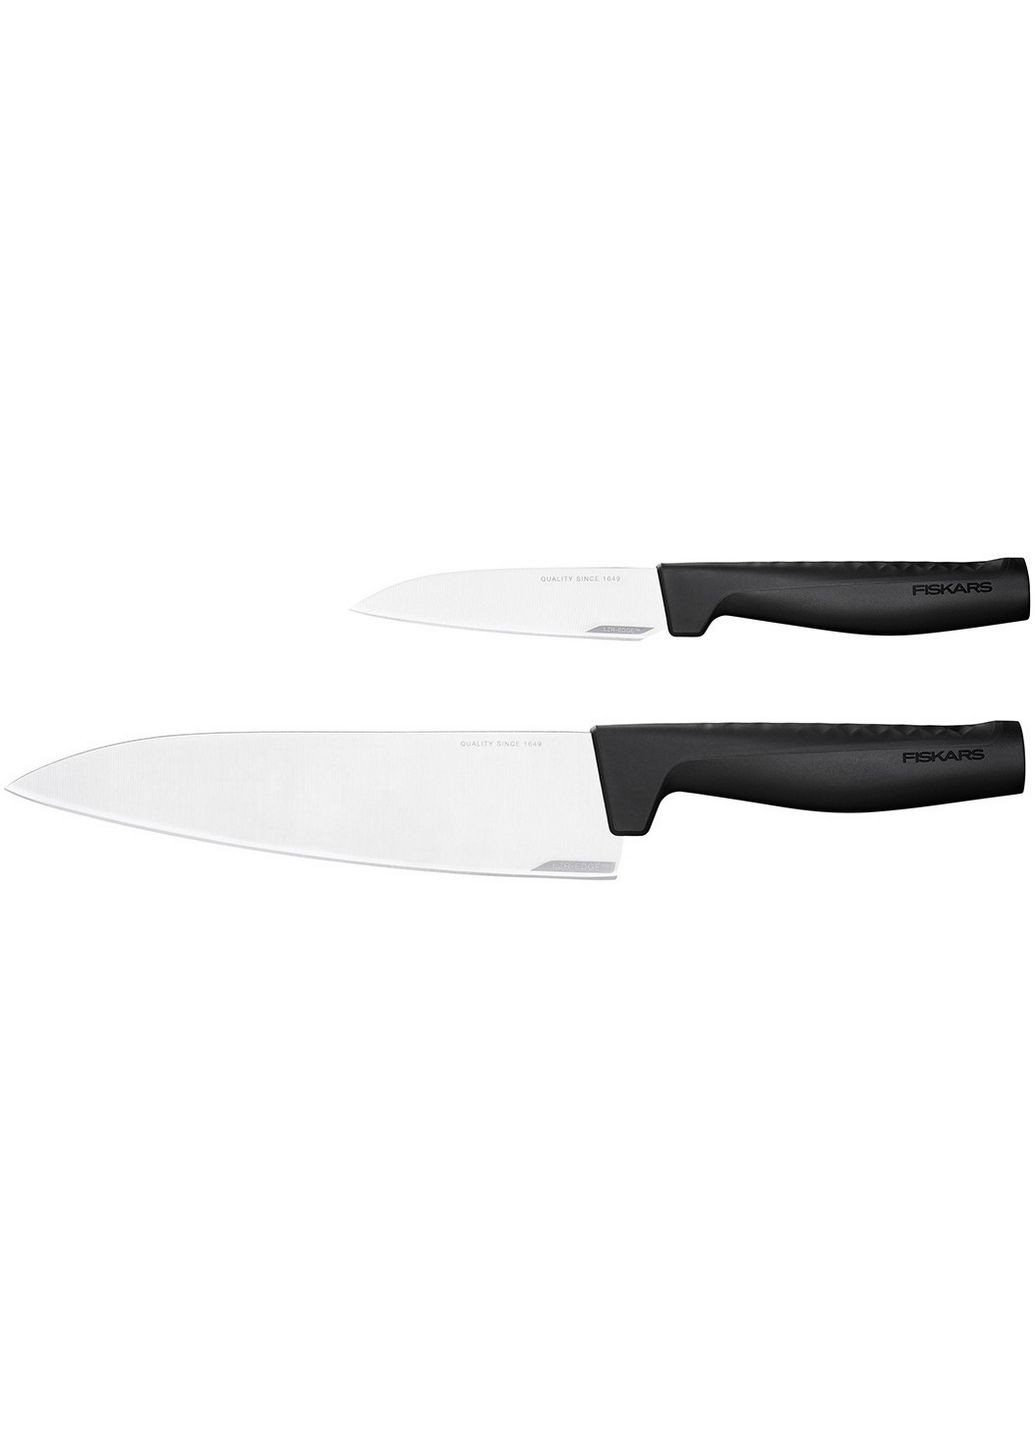 Набор кухонных ножей Hard Edge Knife Set Fiskars комбинированные,